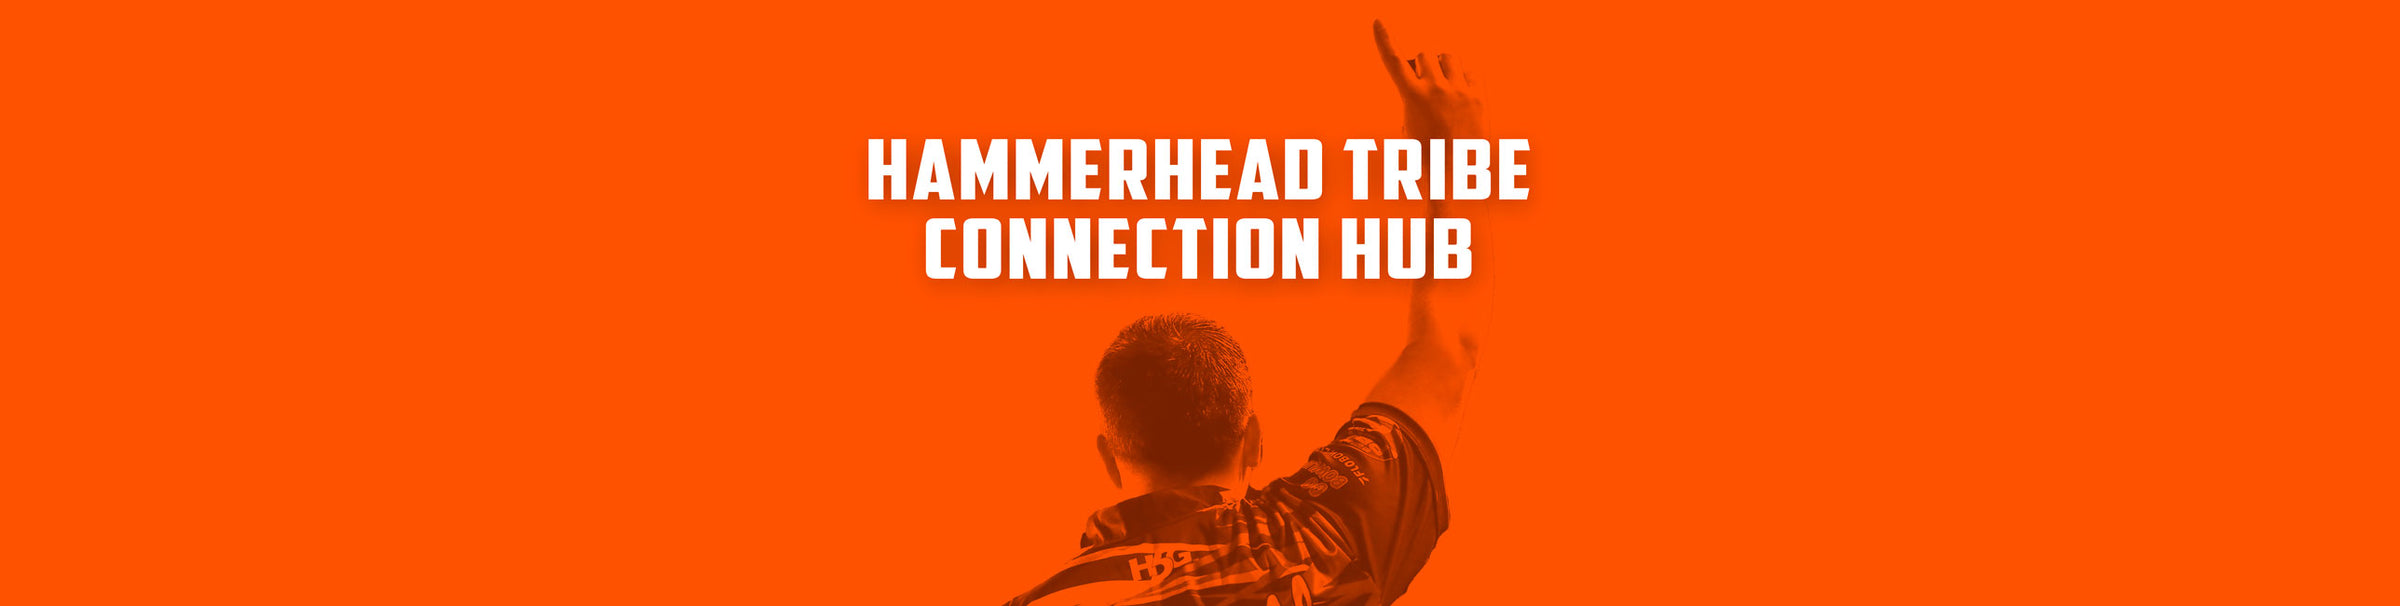 Hammerhead Tribe Connection Hub Header